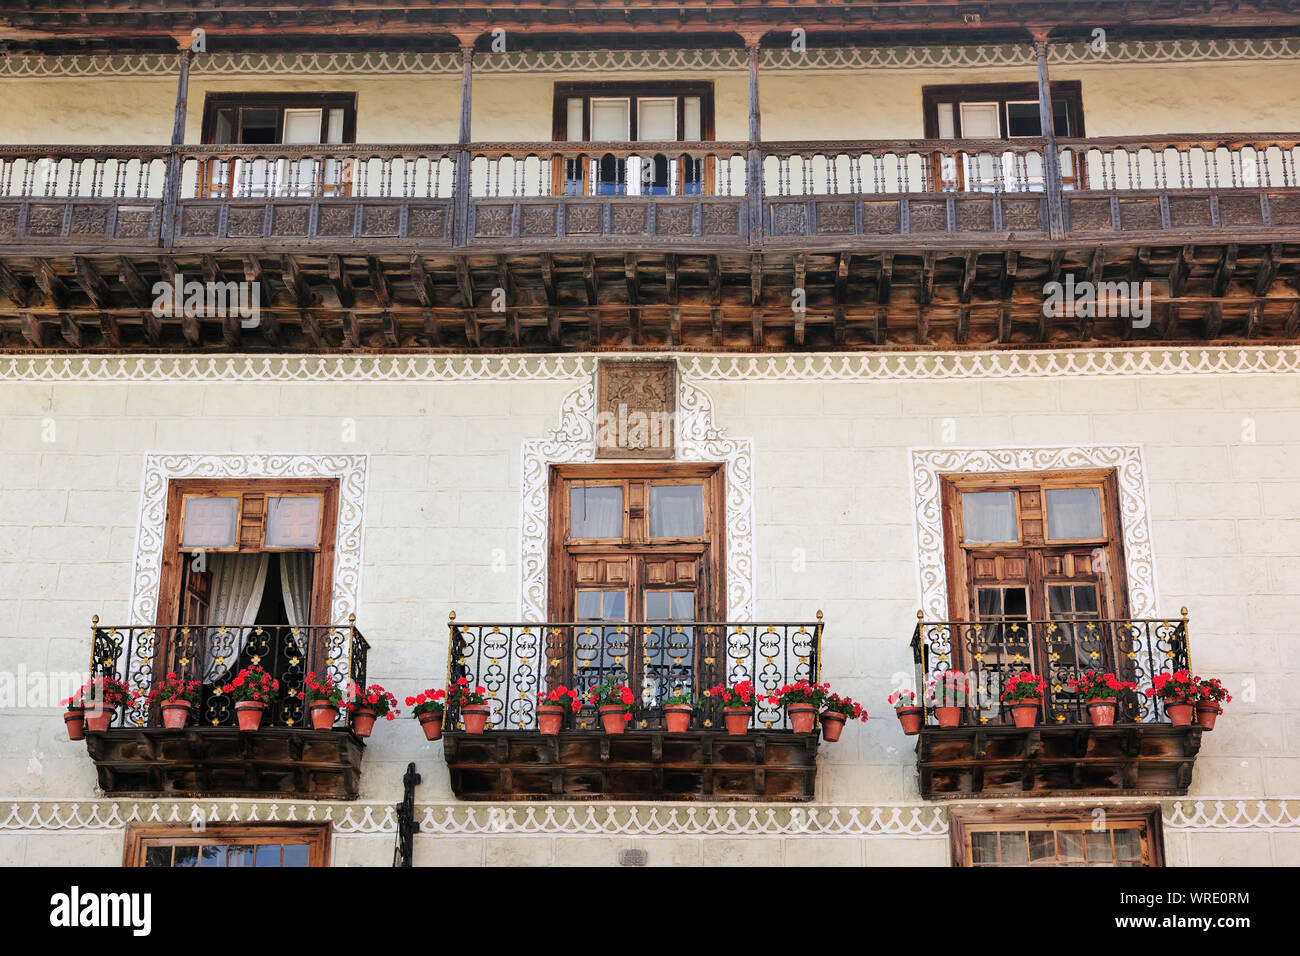 Casa de los Balcones, datant de 1632. La Orotava, Tenerife, Canaries. Espagne Banque D'Images